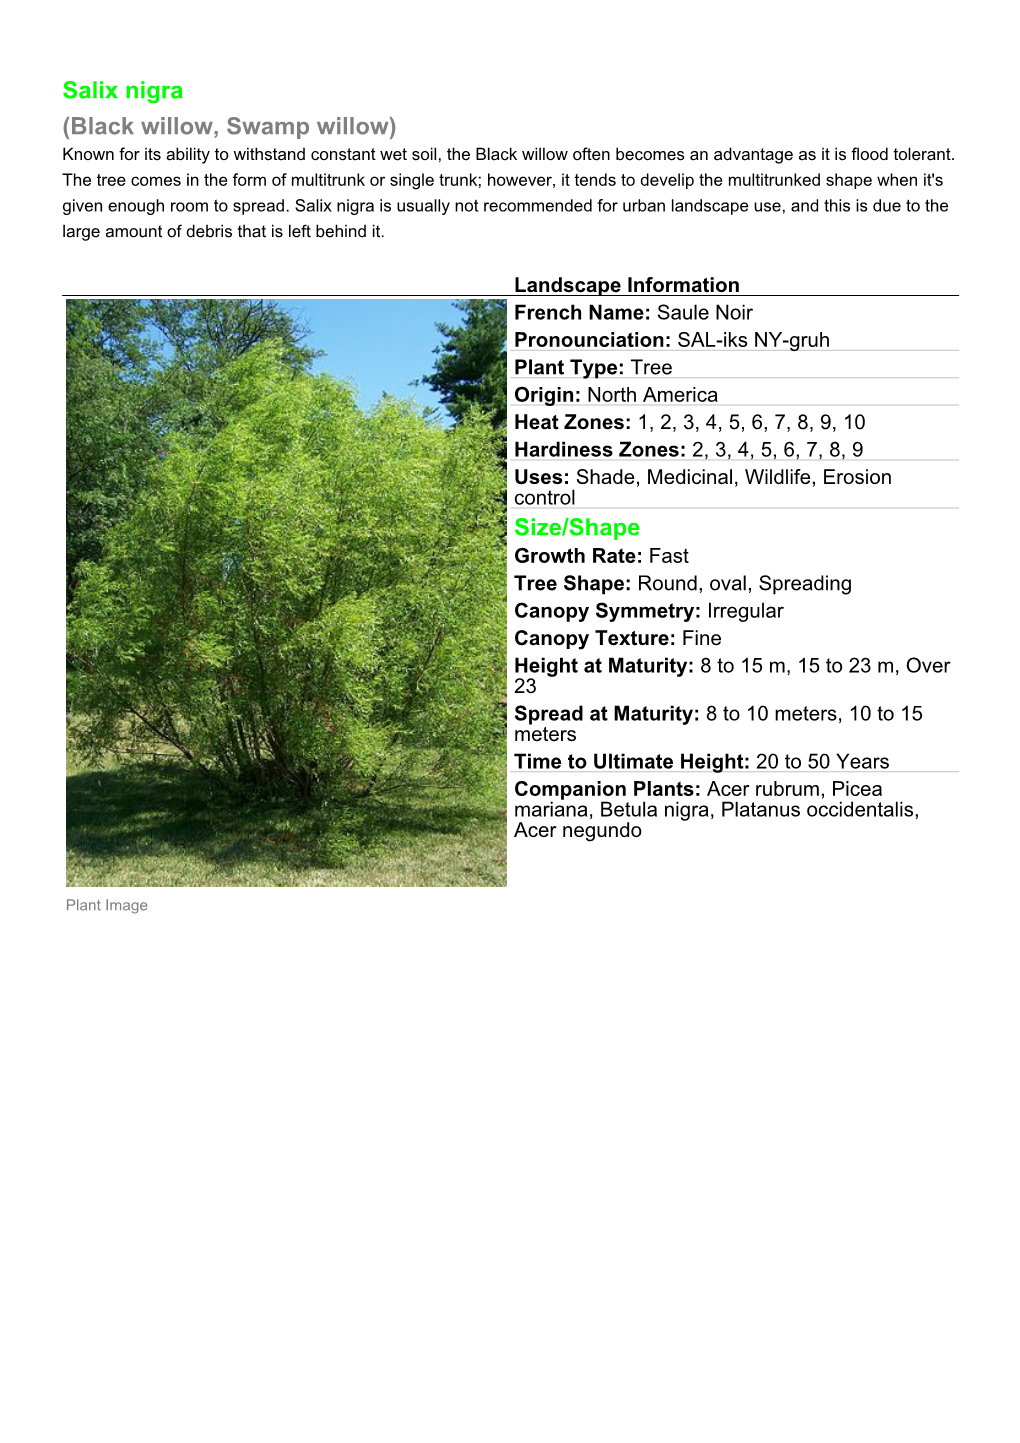 Salix Nigra (Black Willow, Swamp Willow) Size/Shape